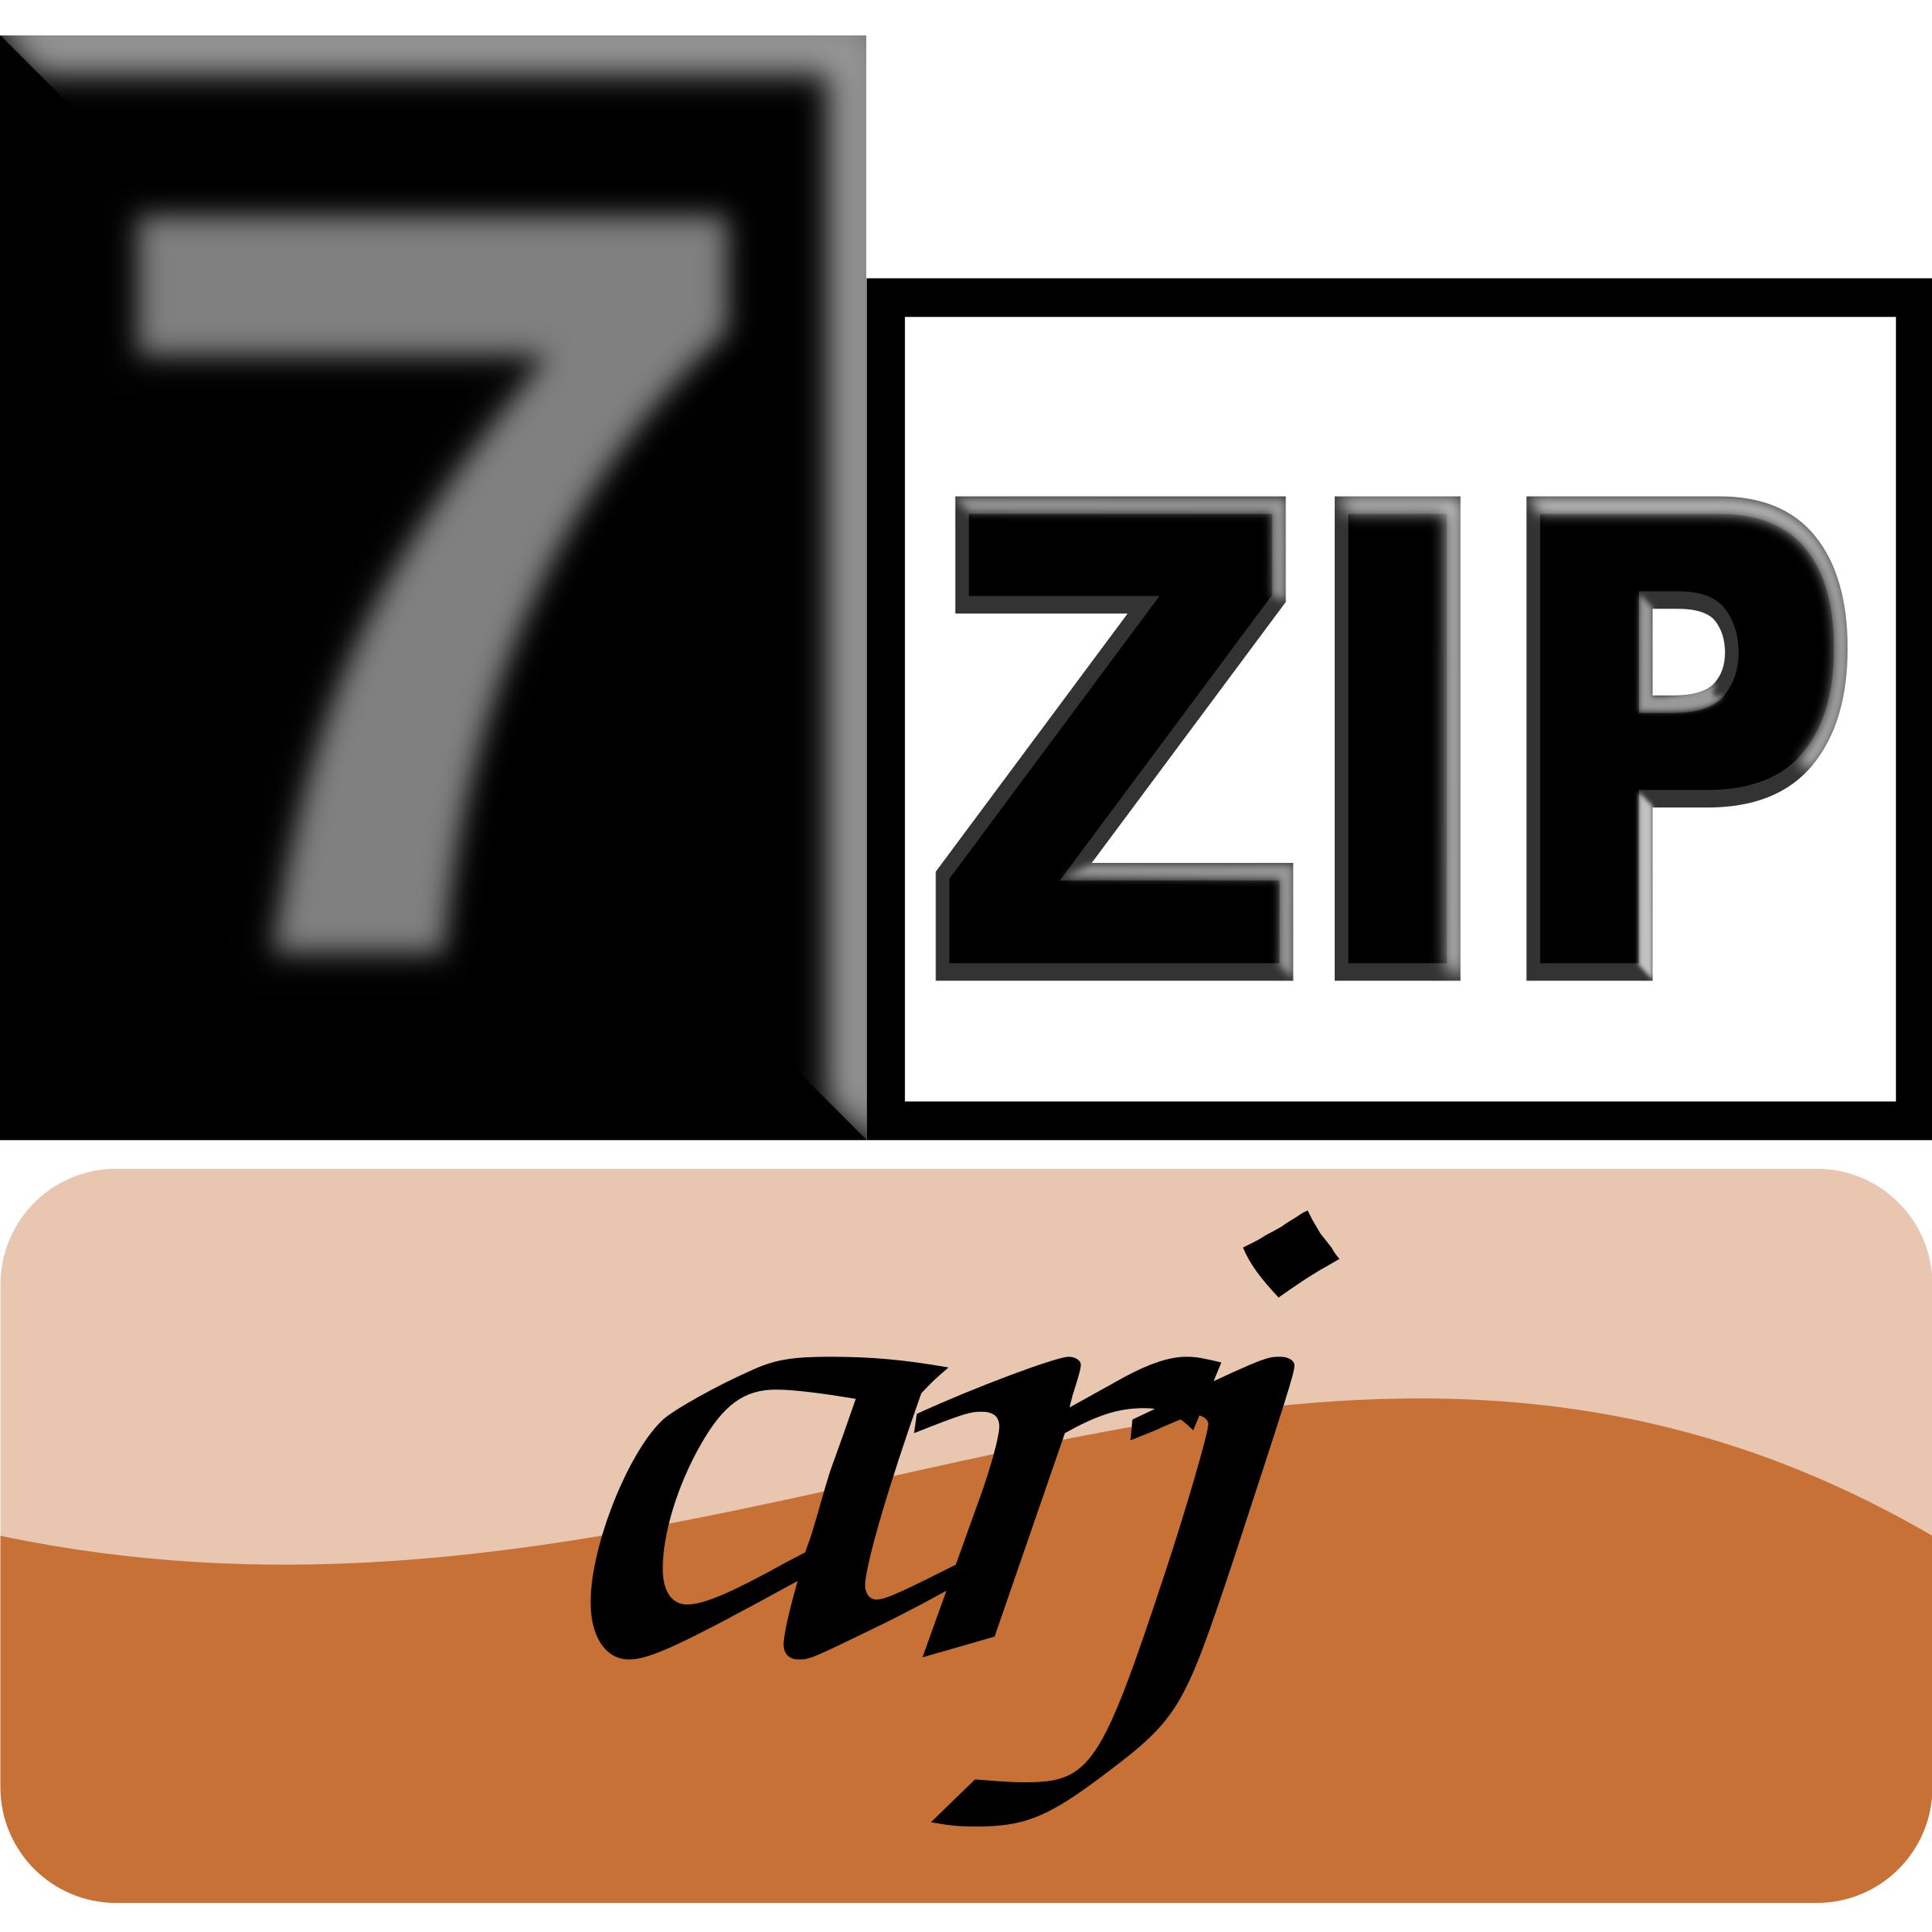 7zipClassic-arj png